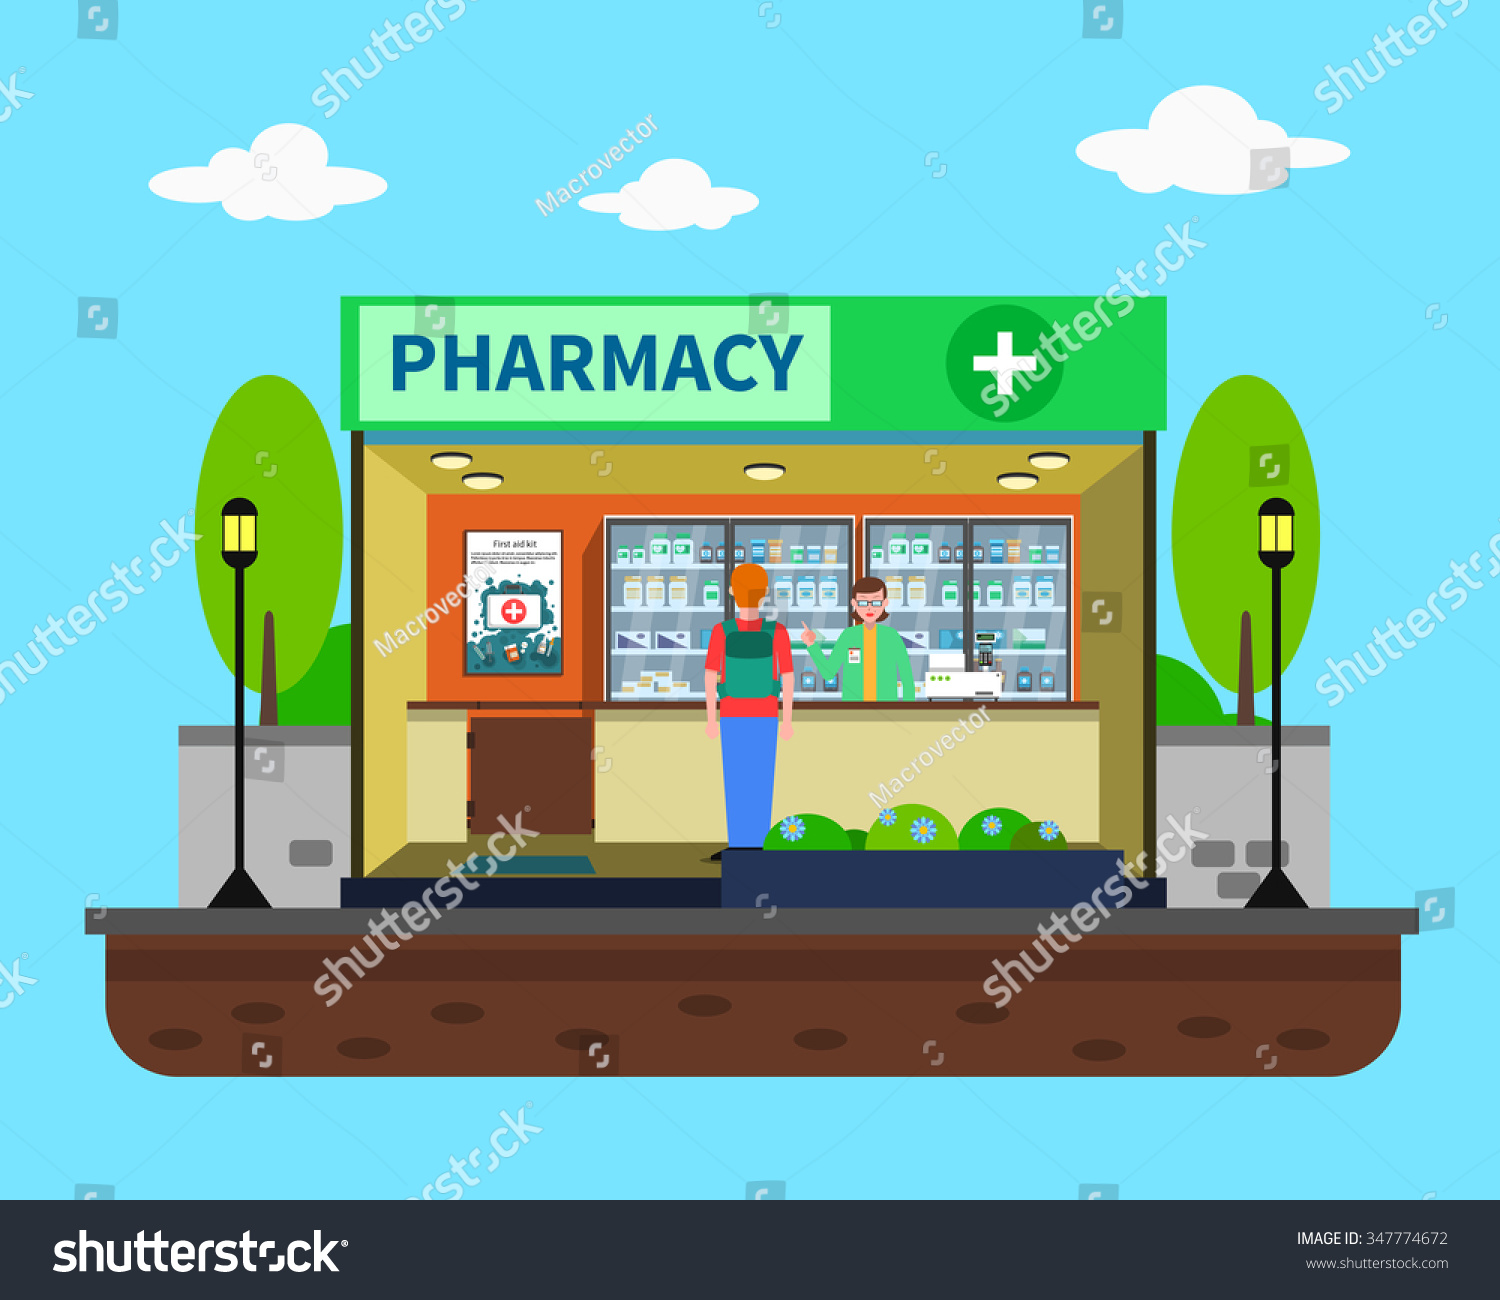 pharmacy related clip art - photo #6